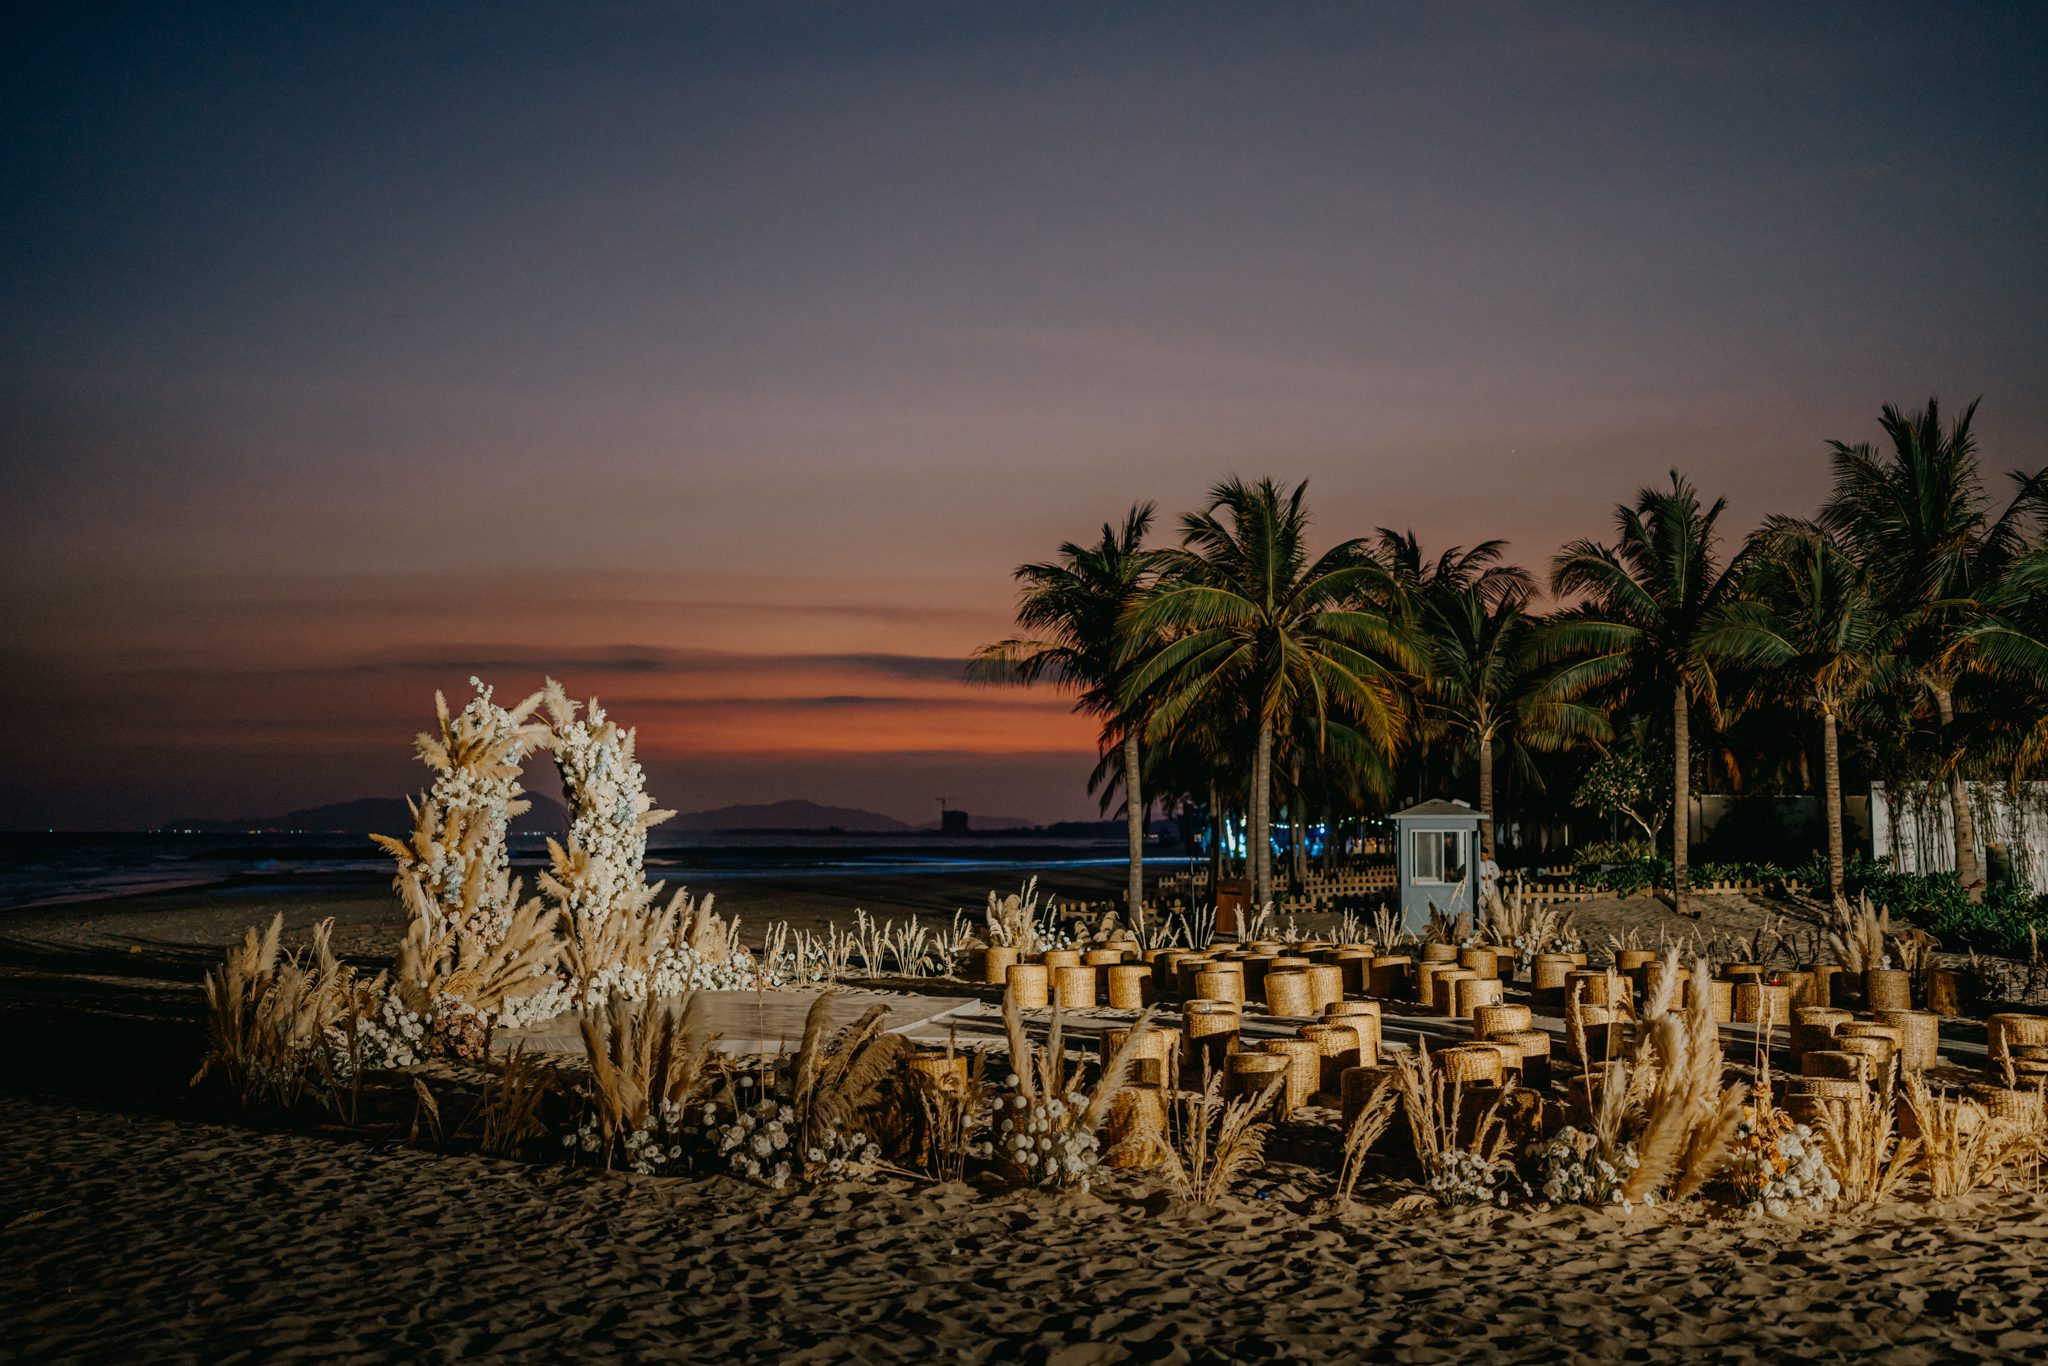 Boho glam beach wedding in Vietnam 2750 - The Planners